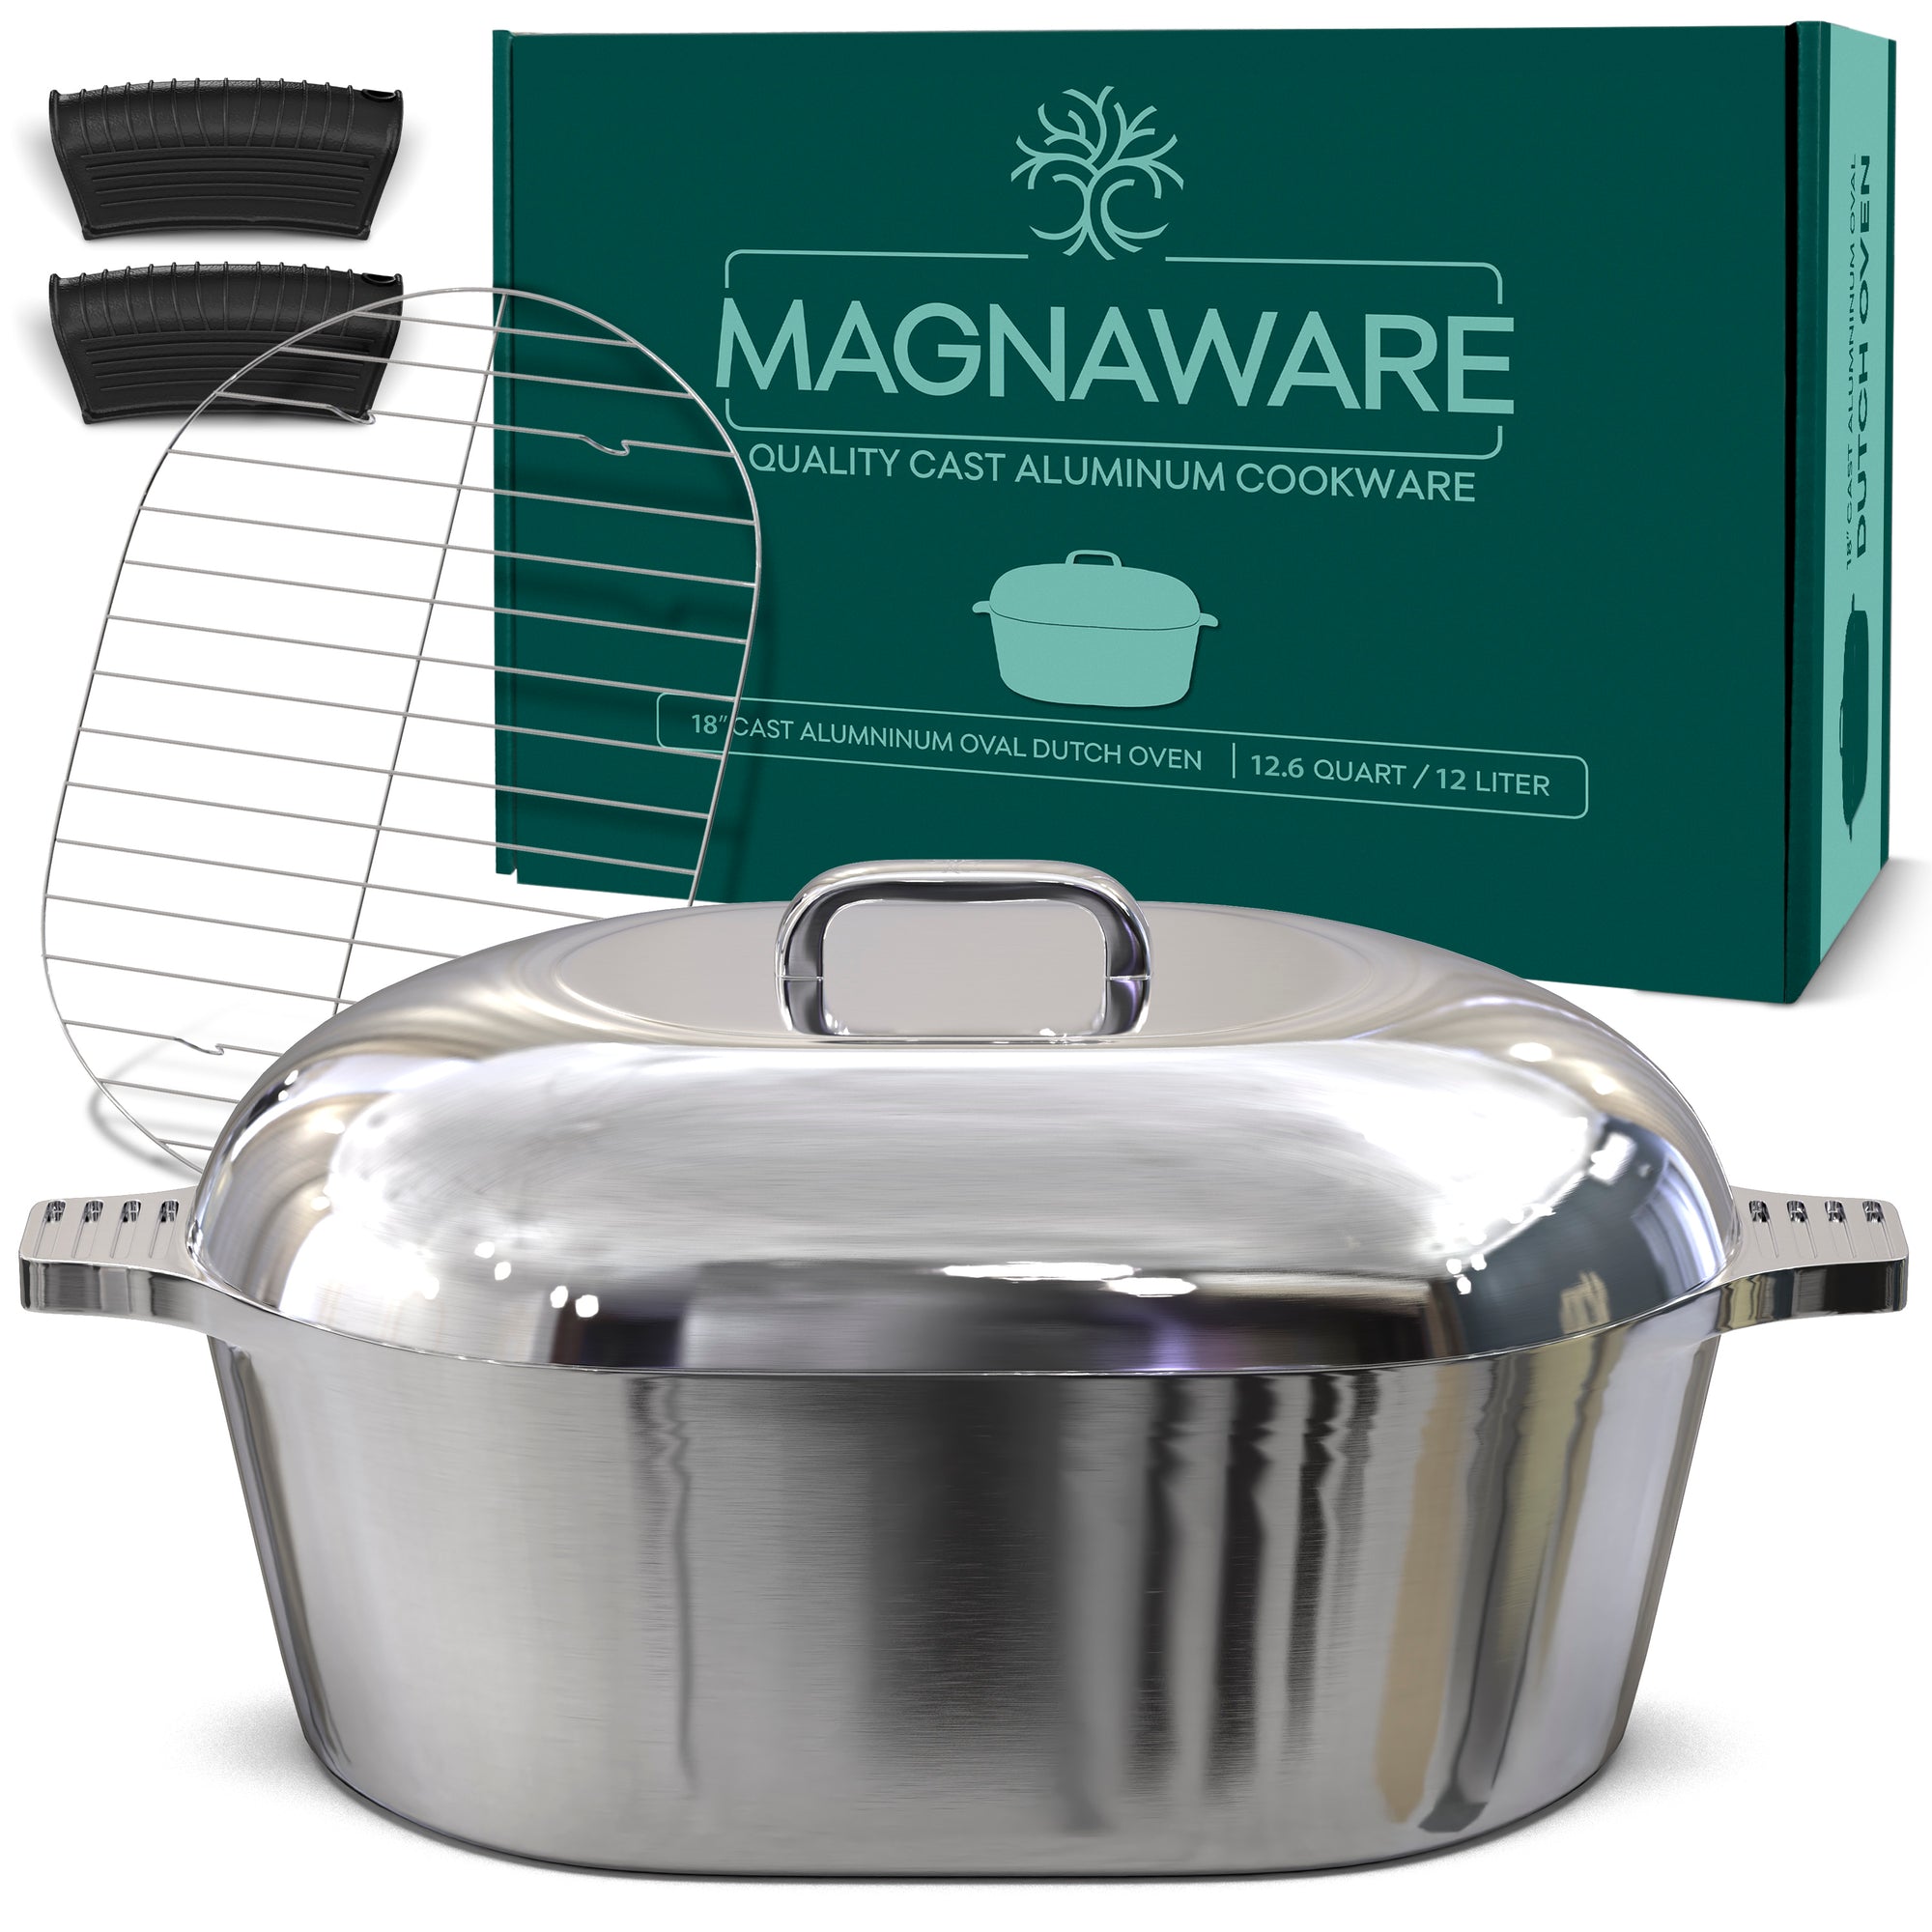 Magnaware Cast Aluminum Dutch Oven - 12.6 Quart (18 Inch) - *Like Magnalite*